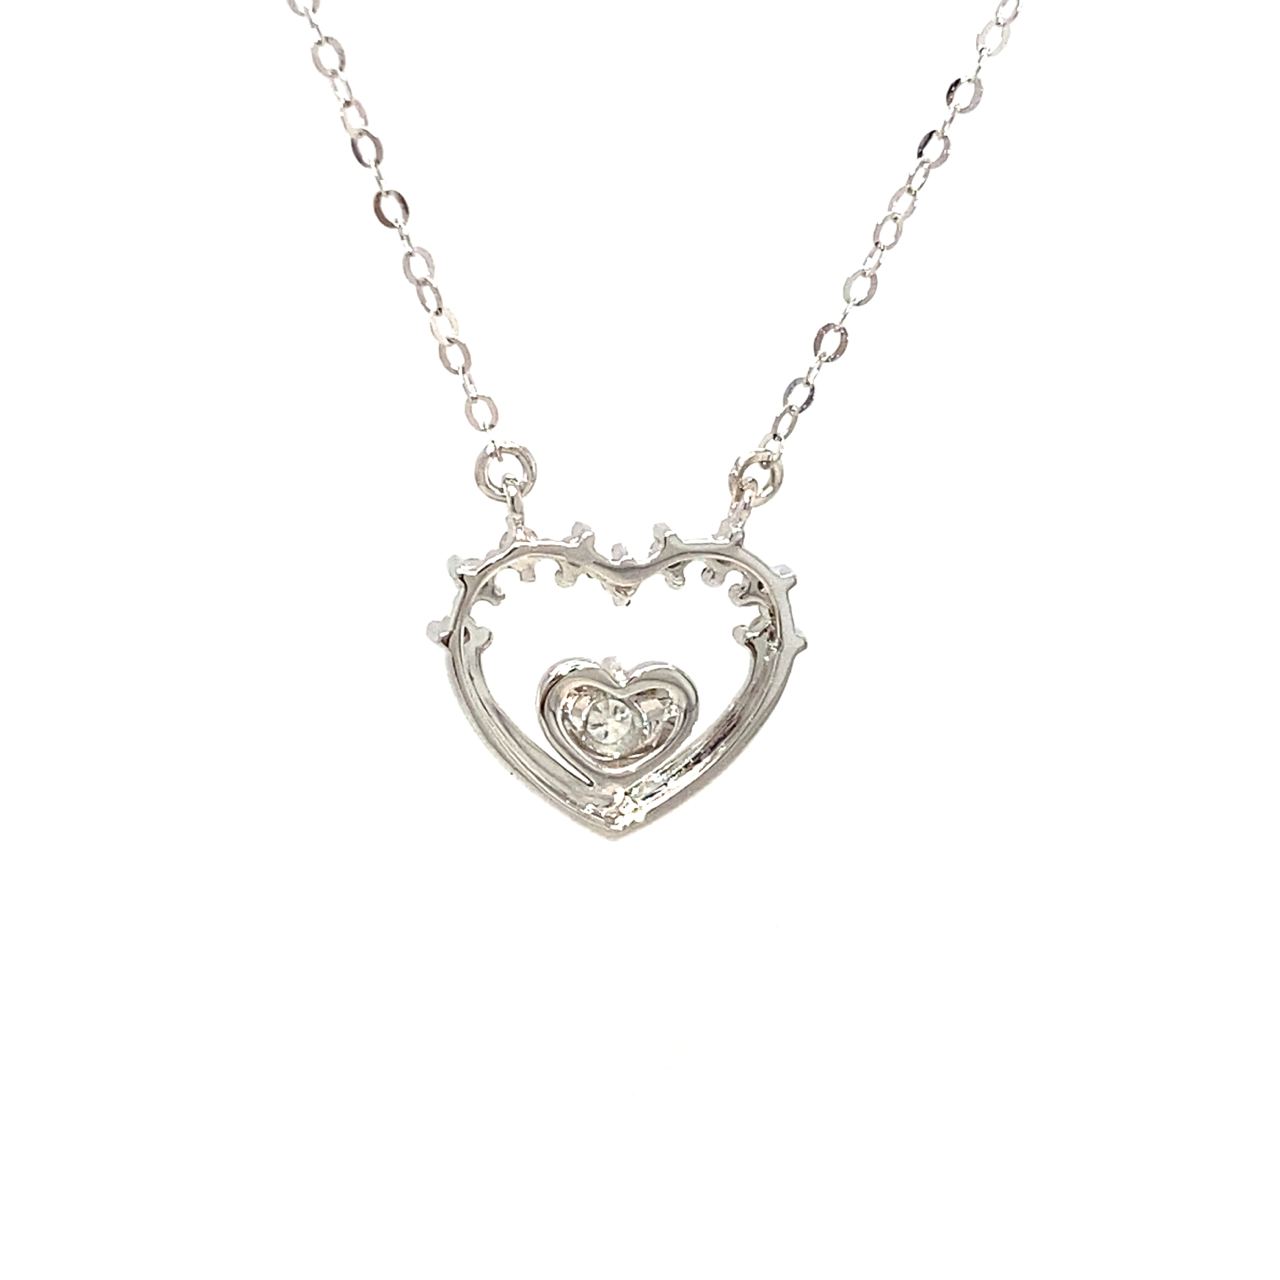 18K White Gold Illusion Setting Double Heart Diamond Necklace